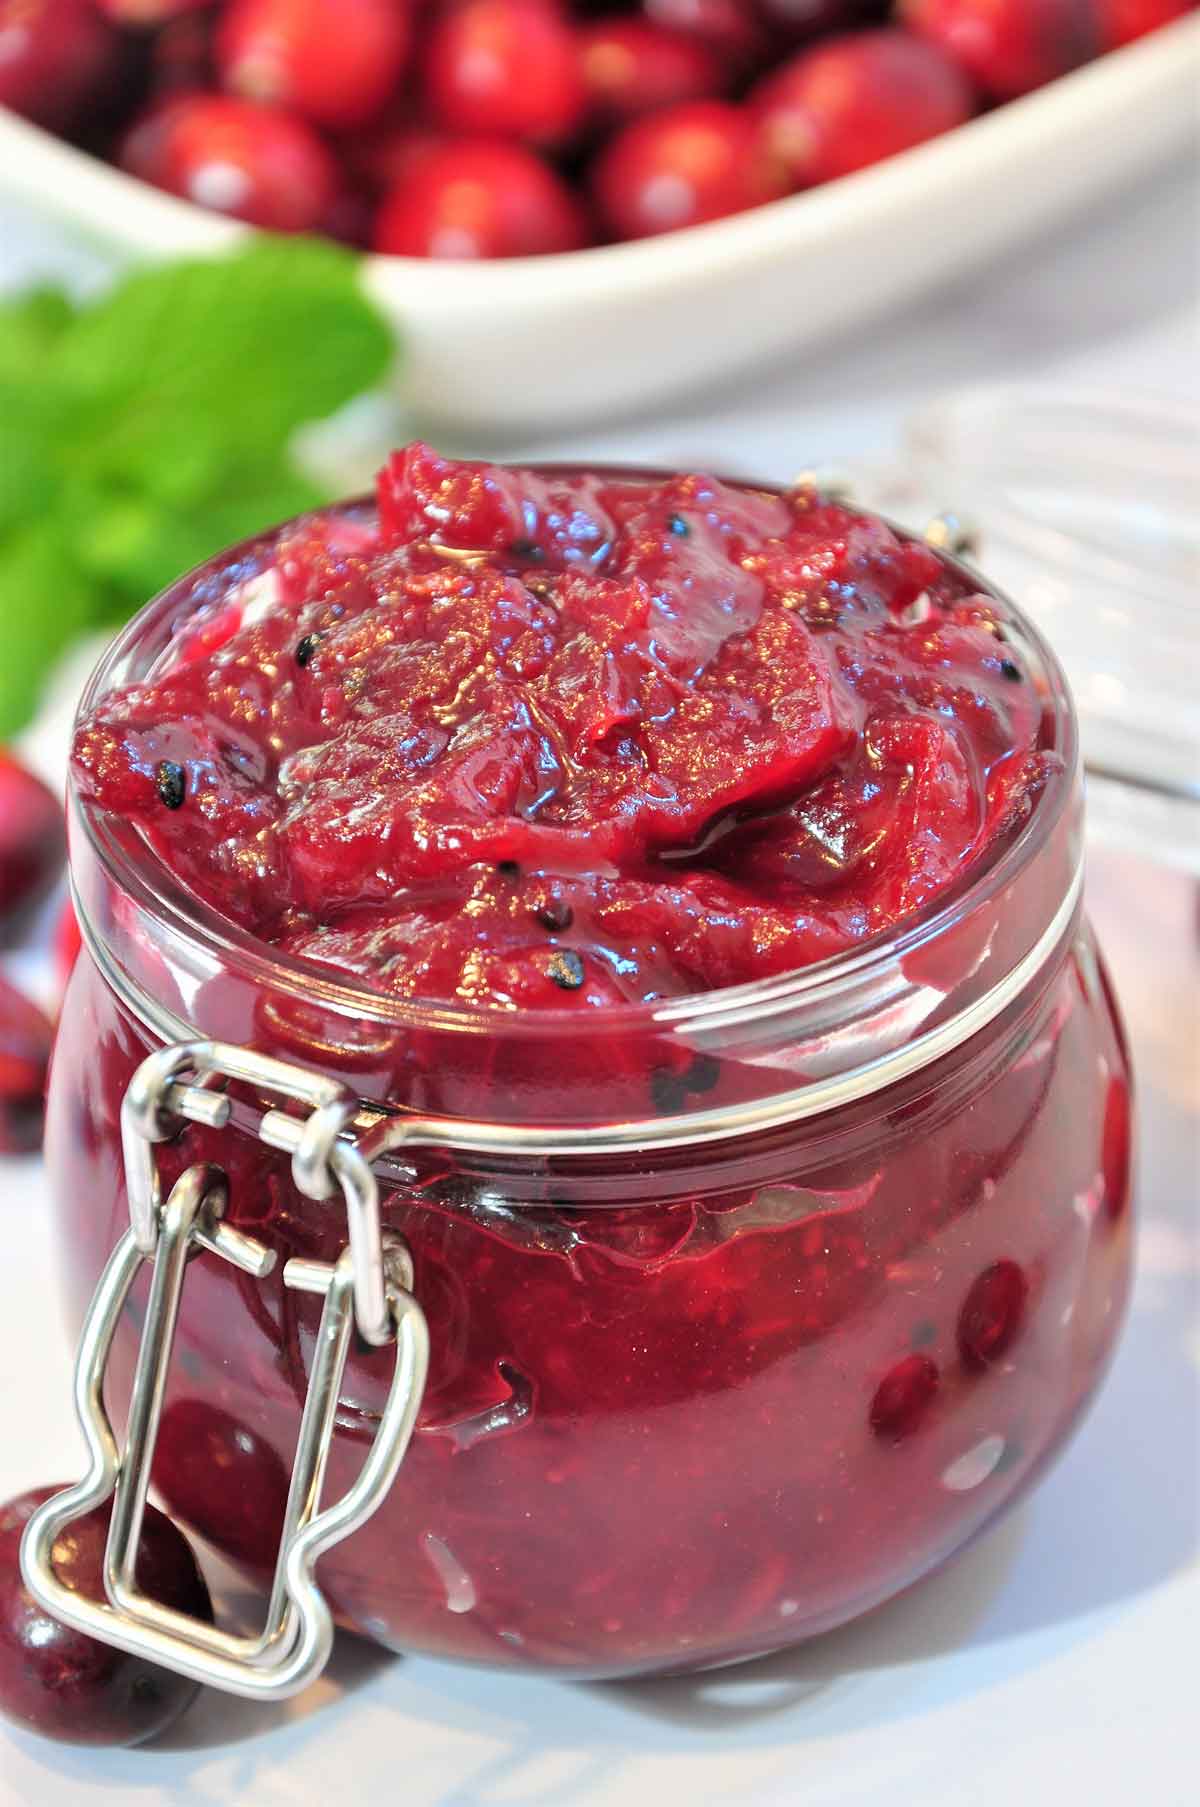 Cranberry chutney in a glass jar.